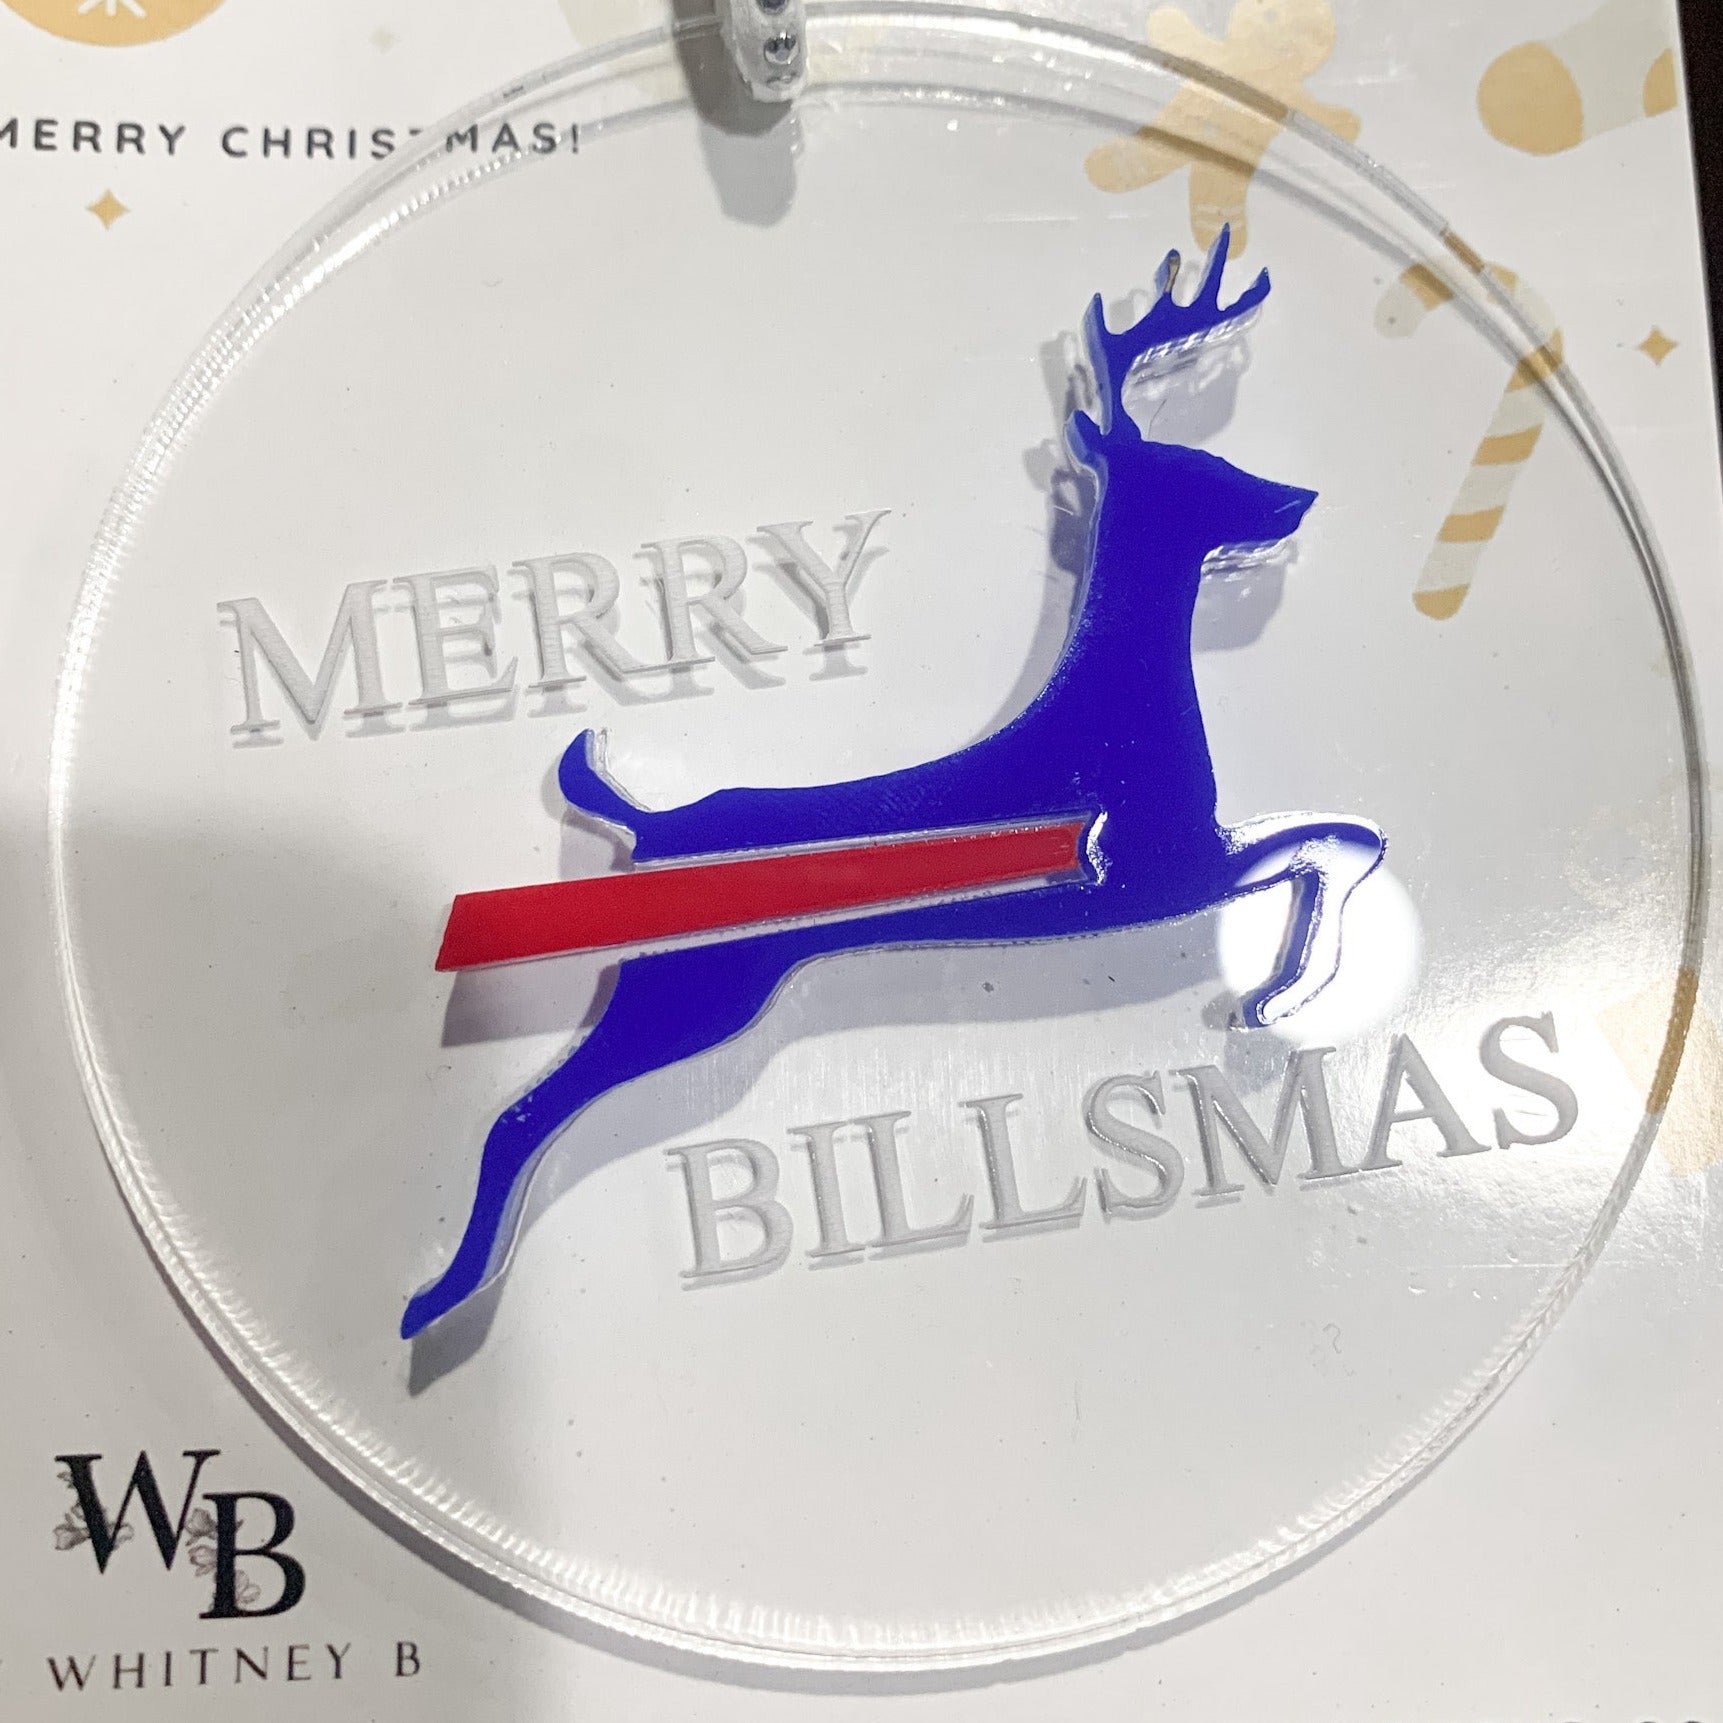 Merry BillsMas Ornament